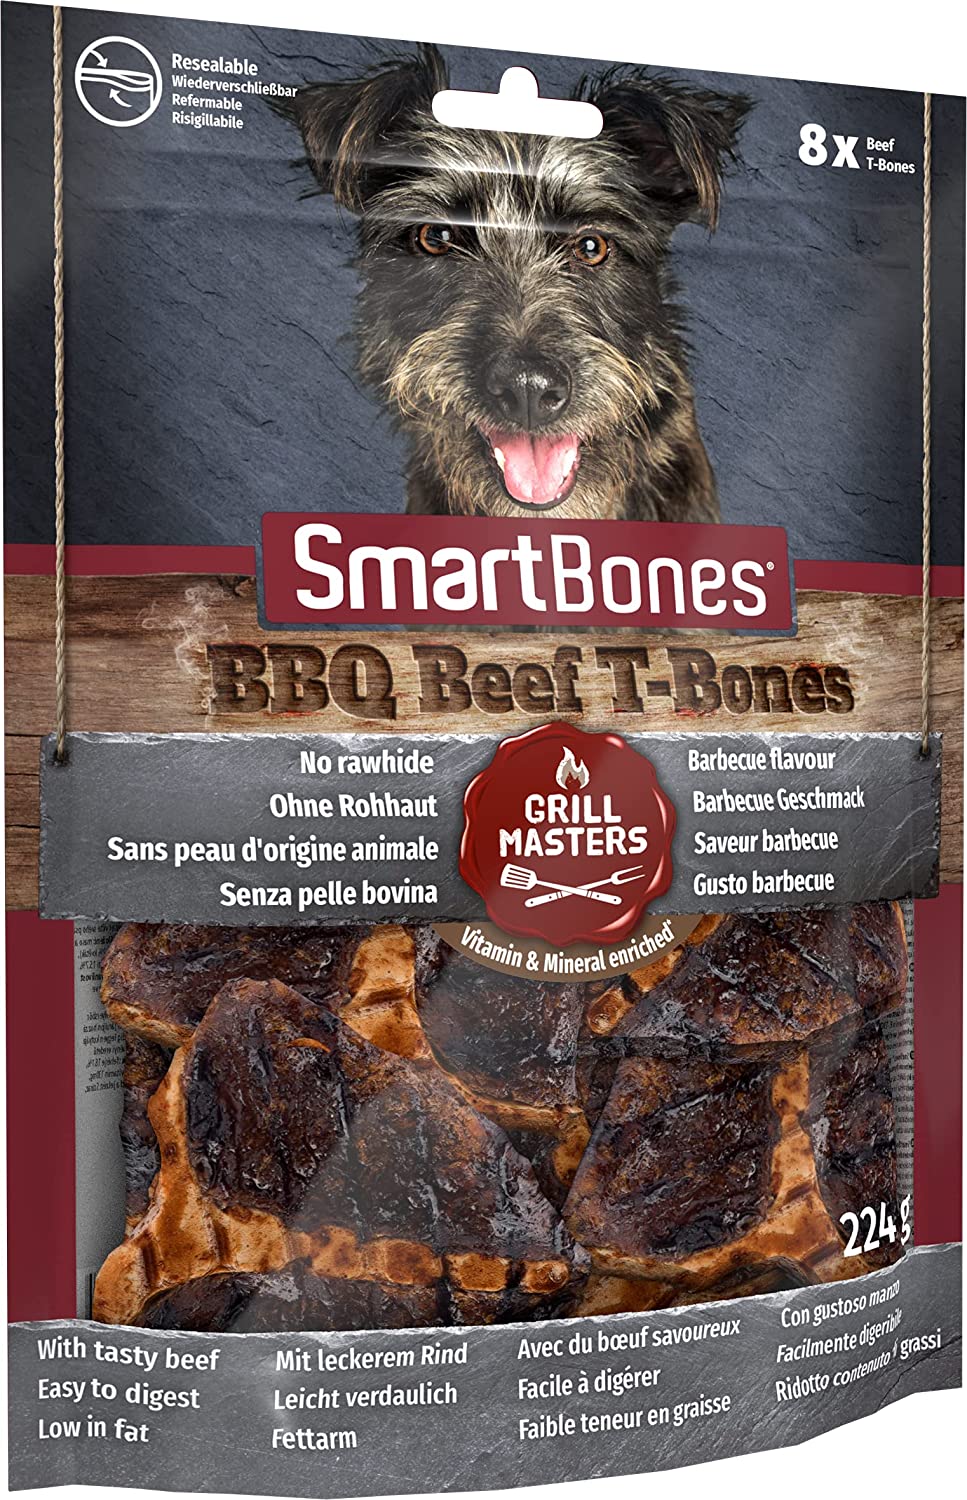 SmartBones - Guloseimas de Churrasco Beef T-Bones Grill para cães